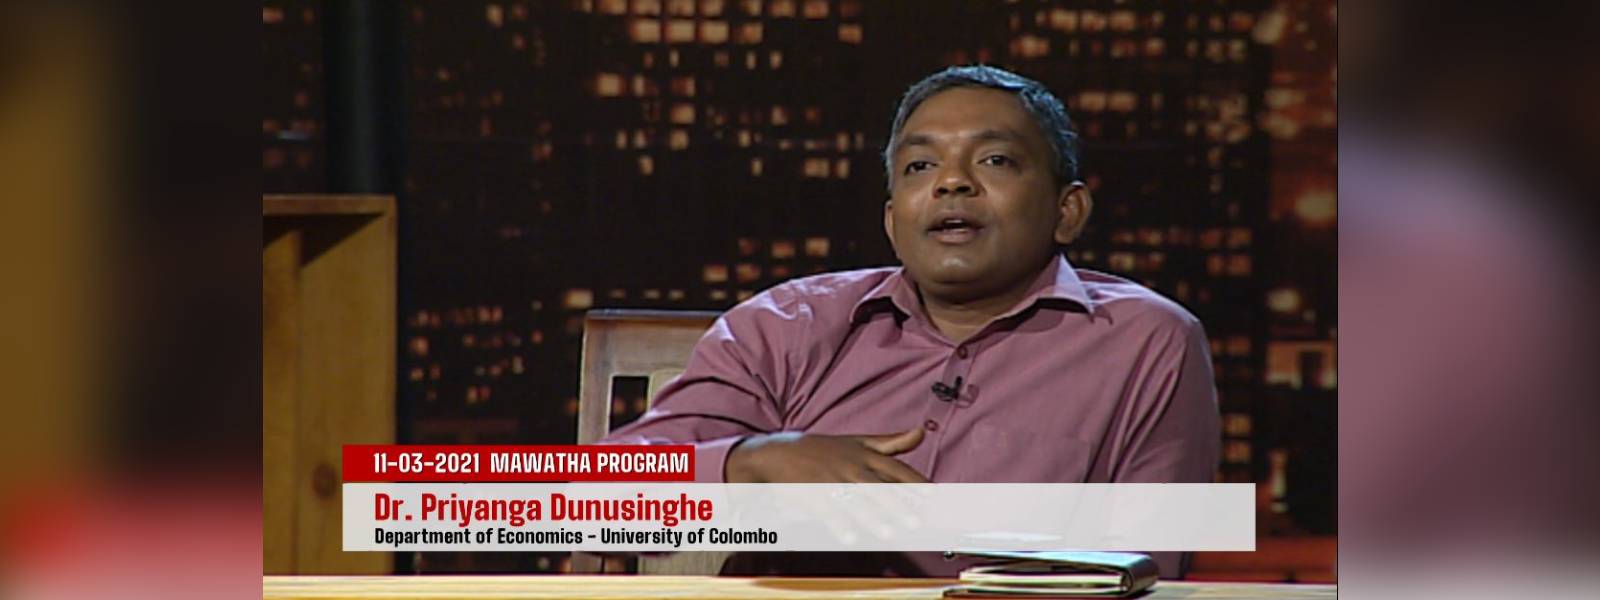 ISB's main cause of economic crisis: Dr. Priyanga